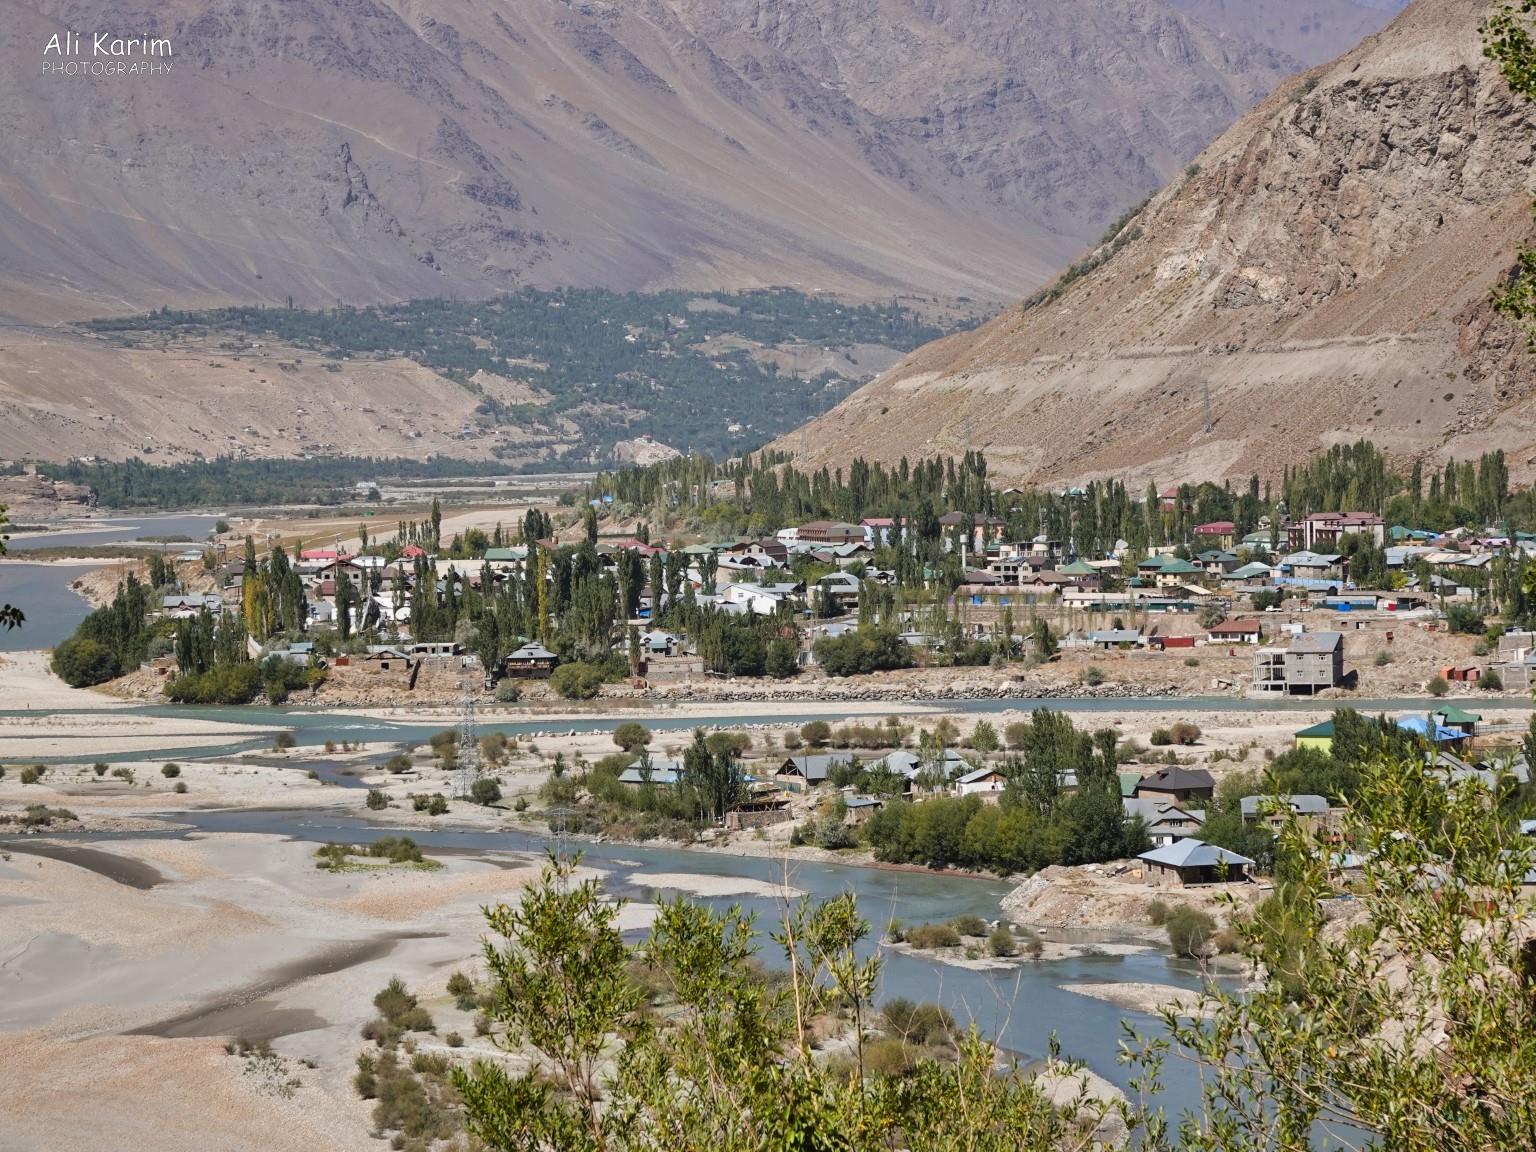 Onto Khorog, Tajikistan, Entrance into Khorog along the Pamir highway, at the confluence of the Panj and Gunt rivers